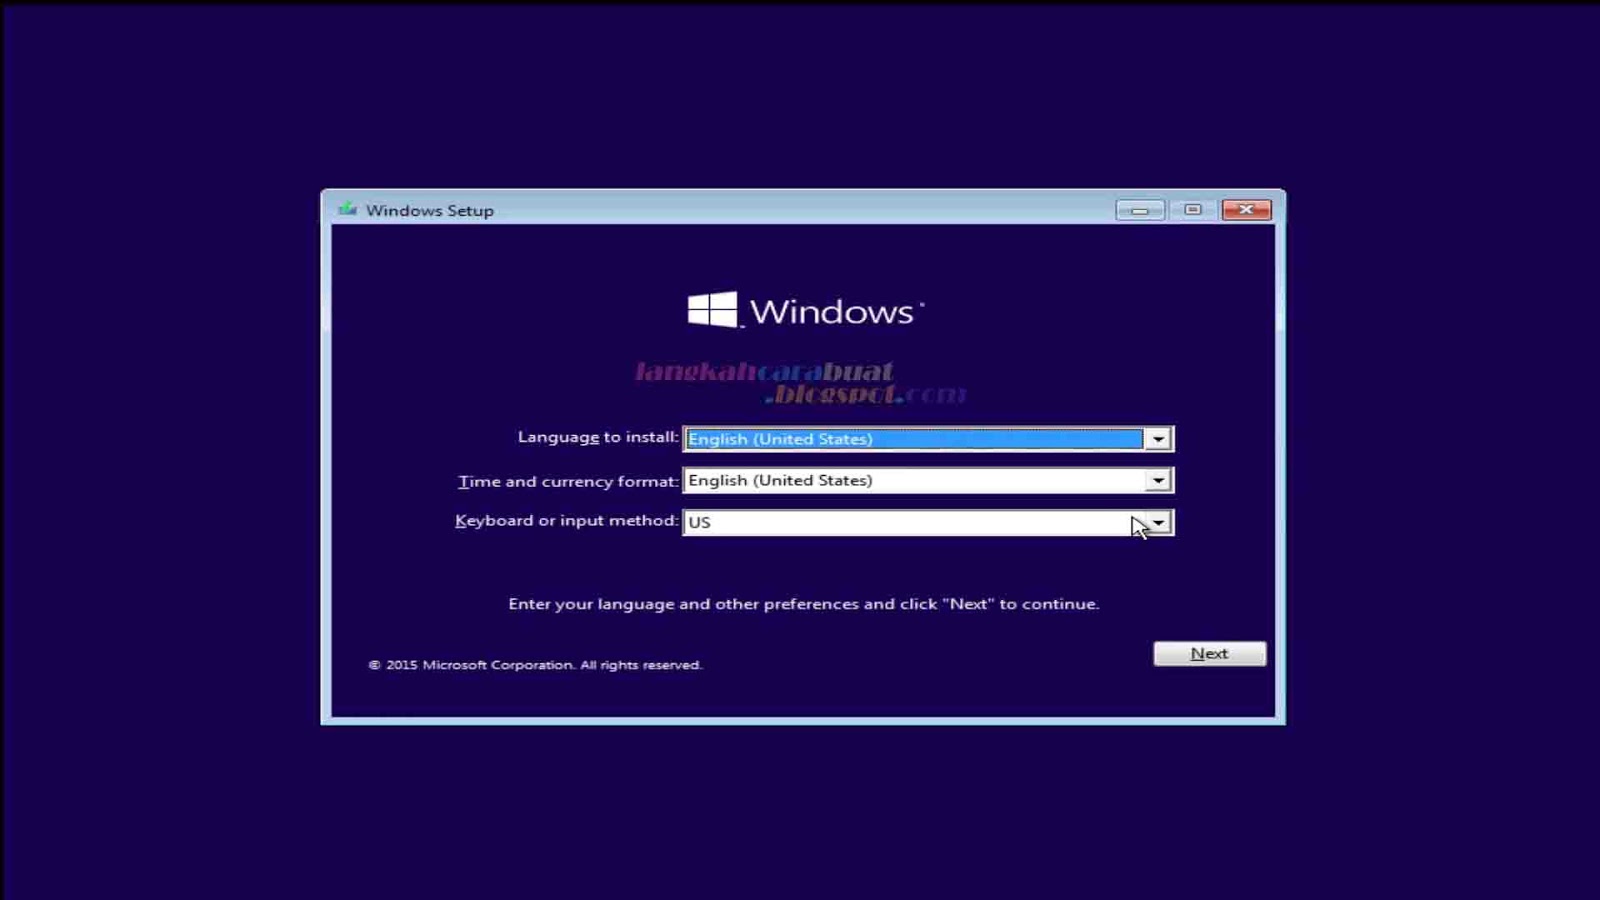 cara instal ulang windows 10